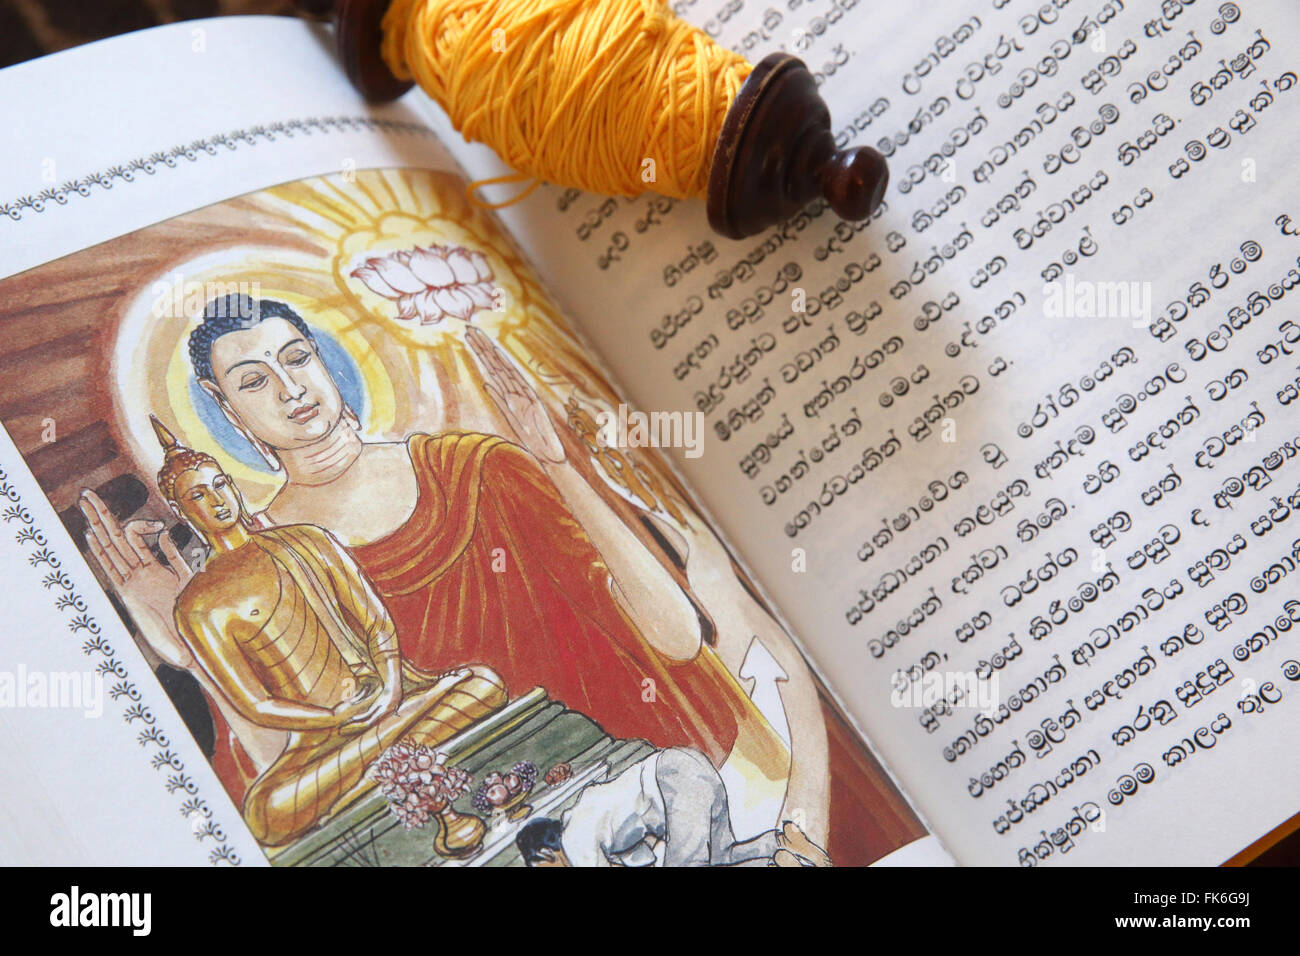 Buddhist sacred texts and a roll of Sai-Sin (sacred thread), Life of Siddhartha Gautama, the Supreme Buddha, Geneva, Switzerland Stock Photo